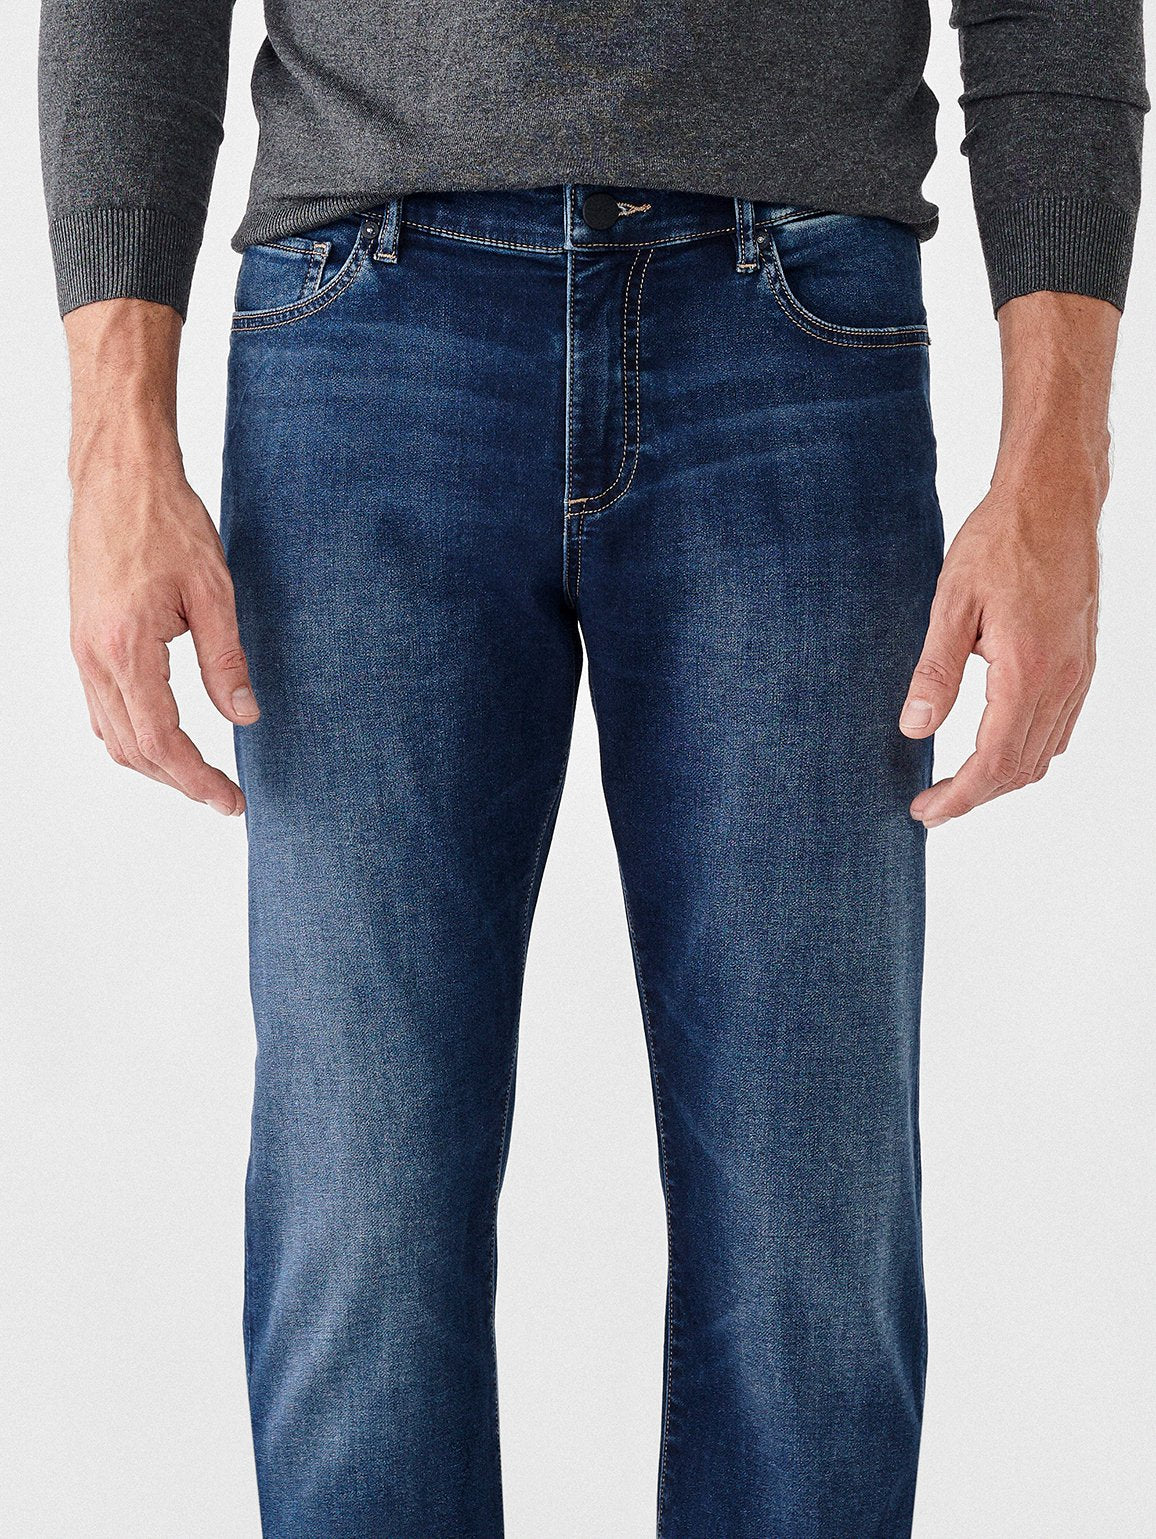 cardiff jeans price